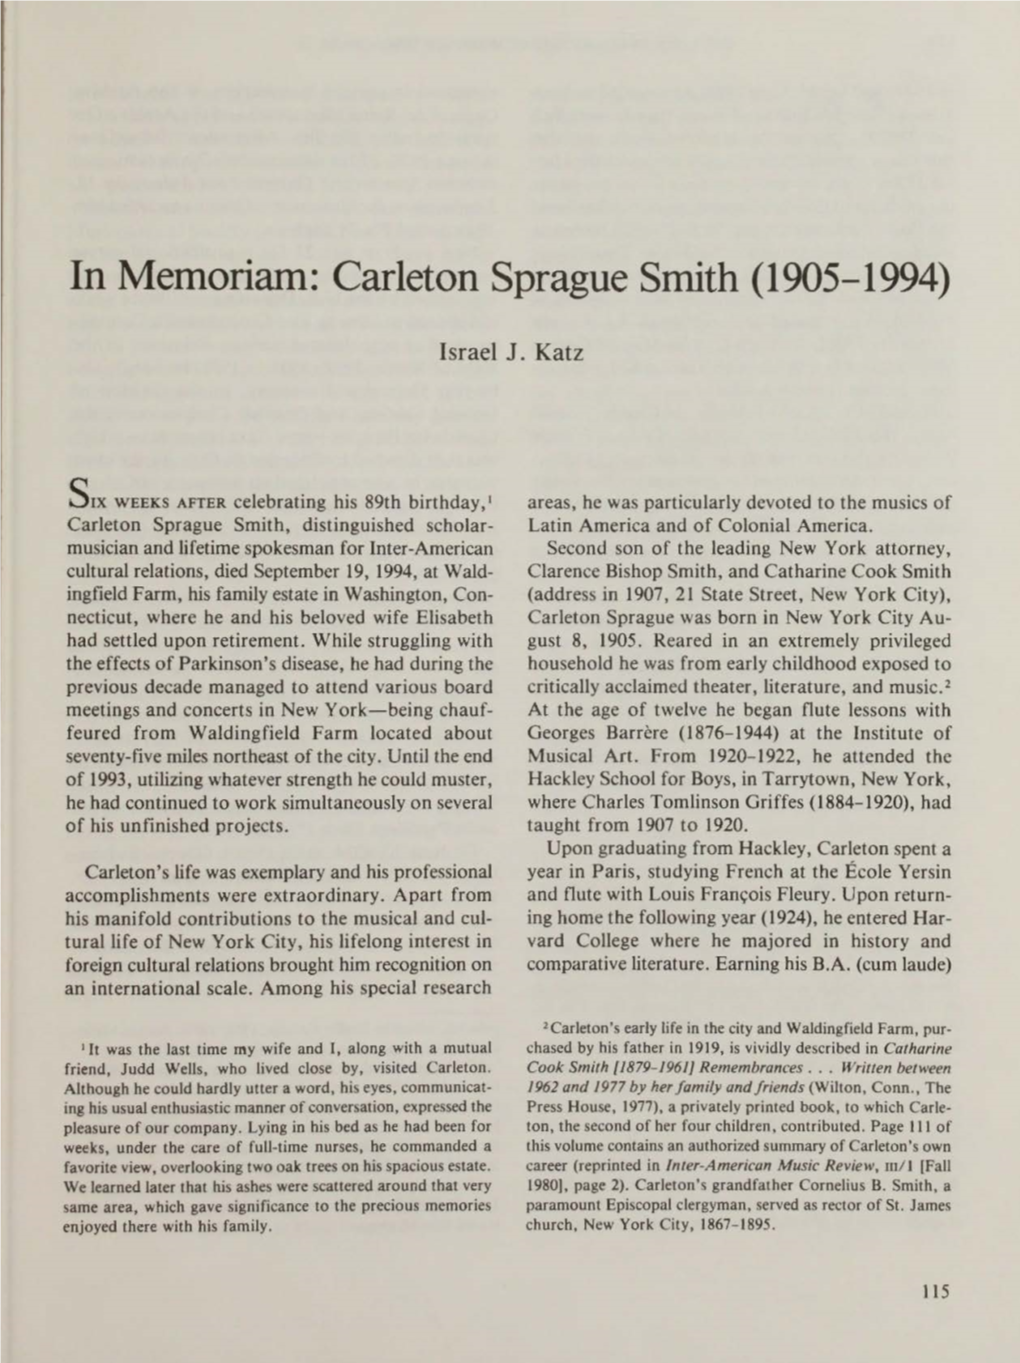 In Memoriam: Carleton Sprague Smith (1905-1994)